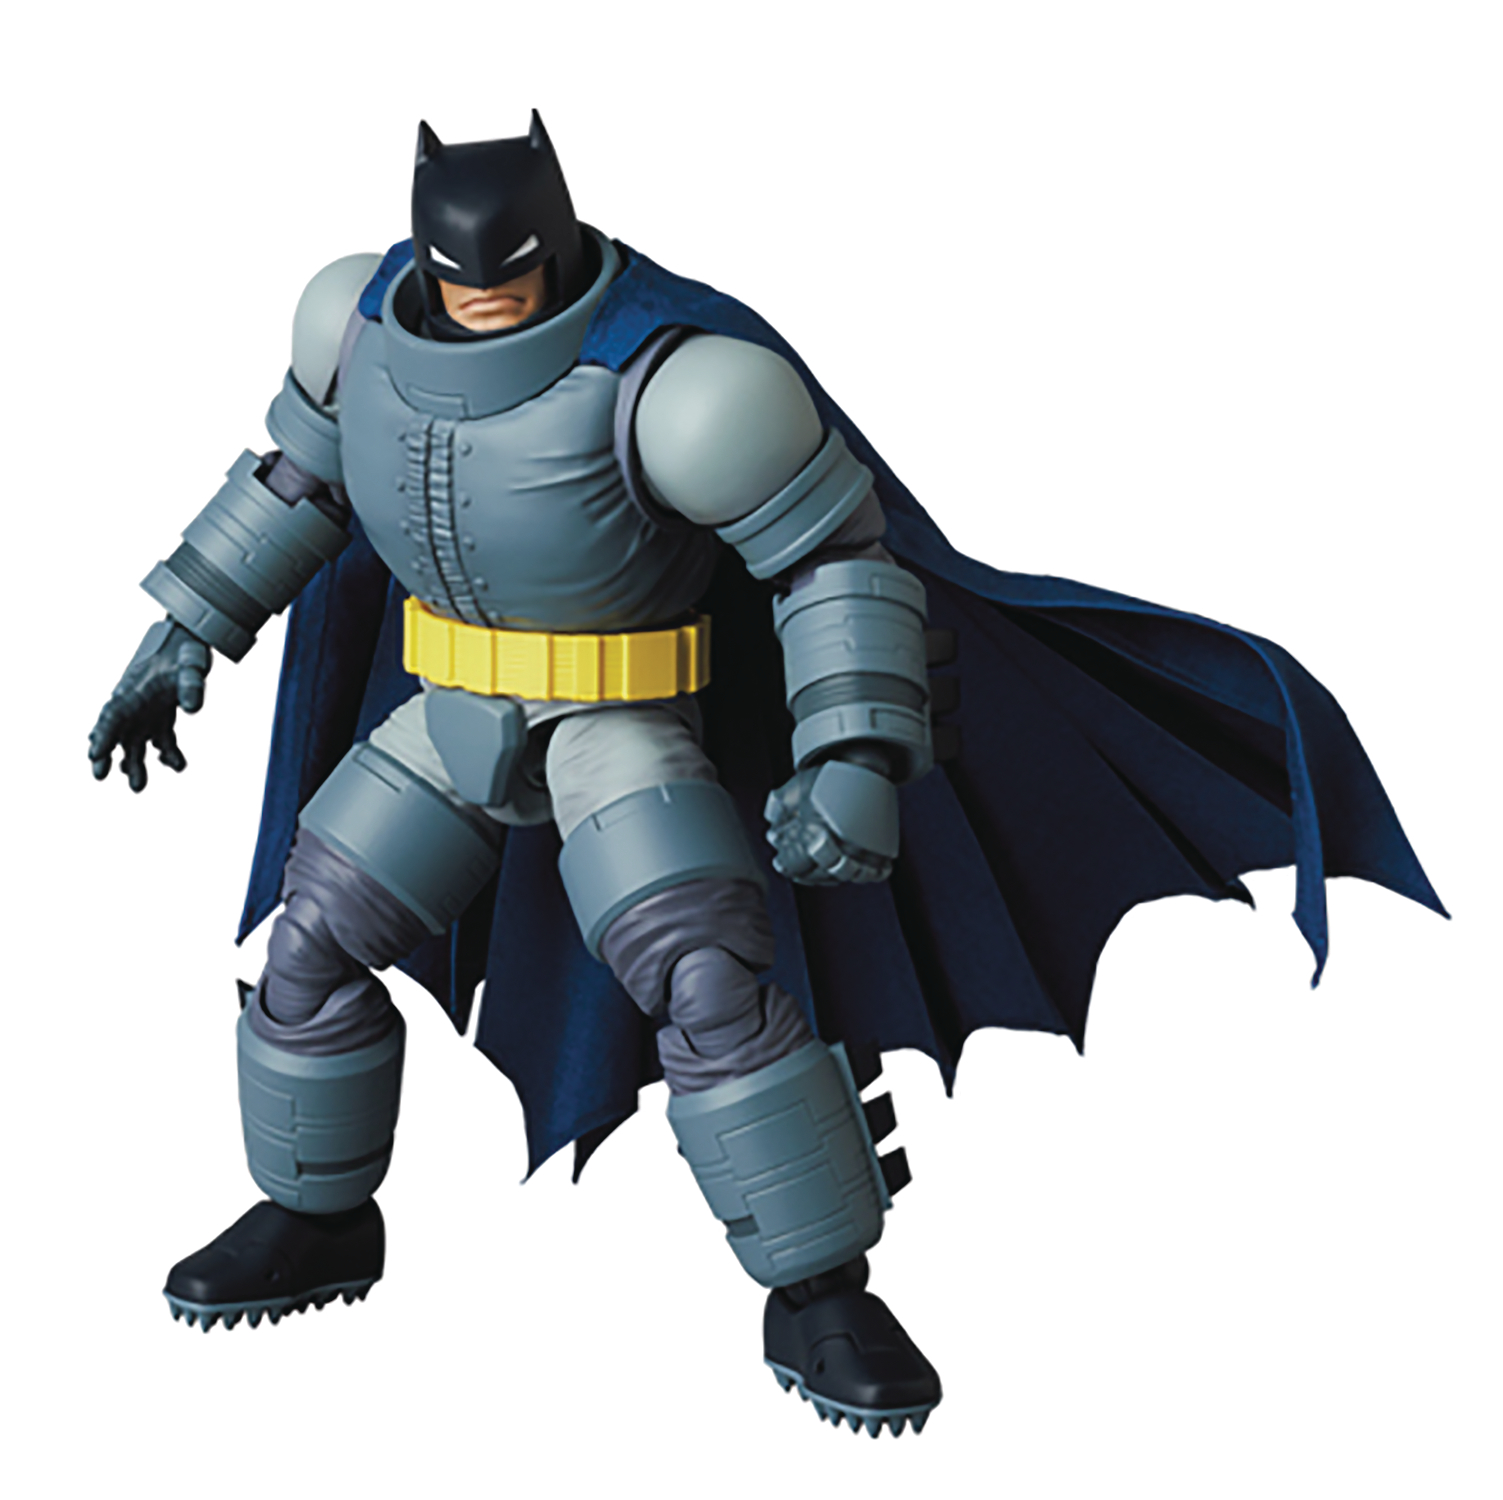 The Dark Knight Returns Armored Batman Mafex Action Figure